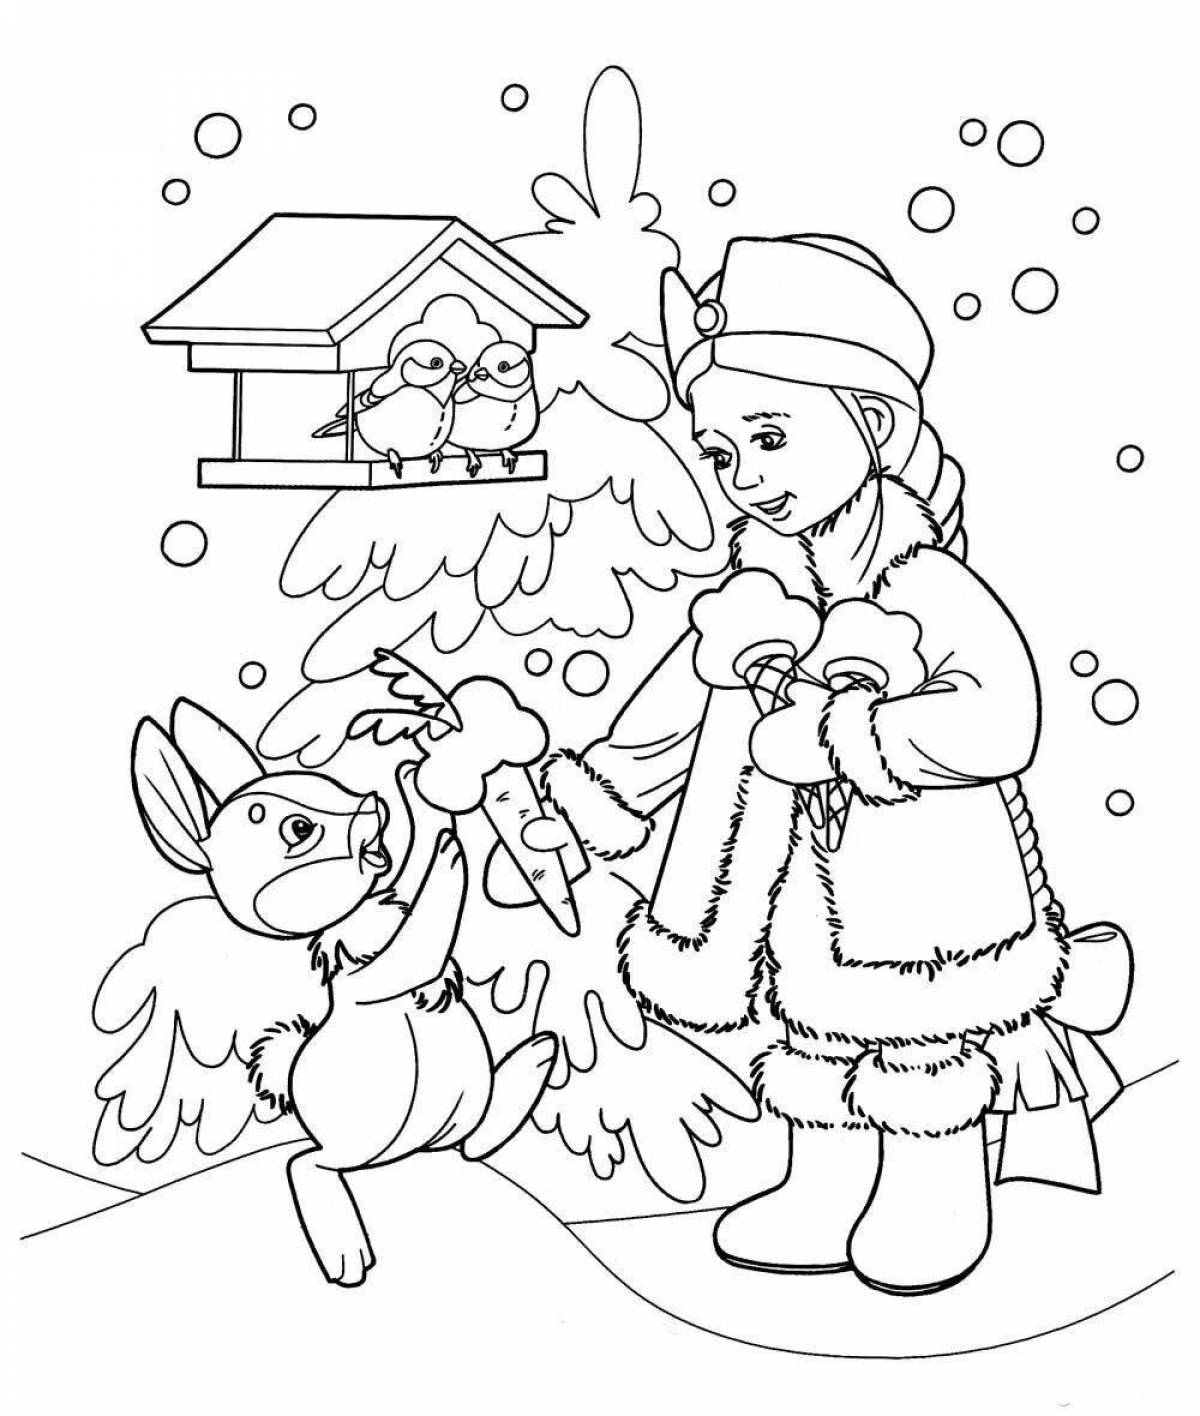 Cute snow maiden coloring book